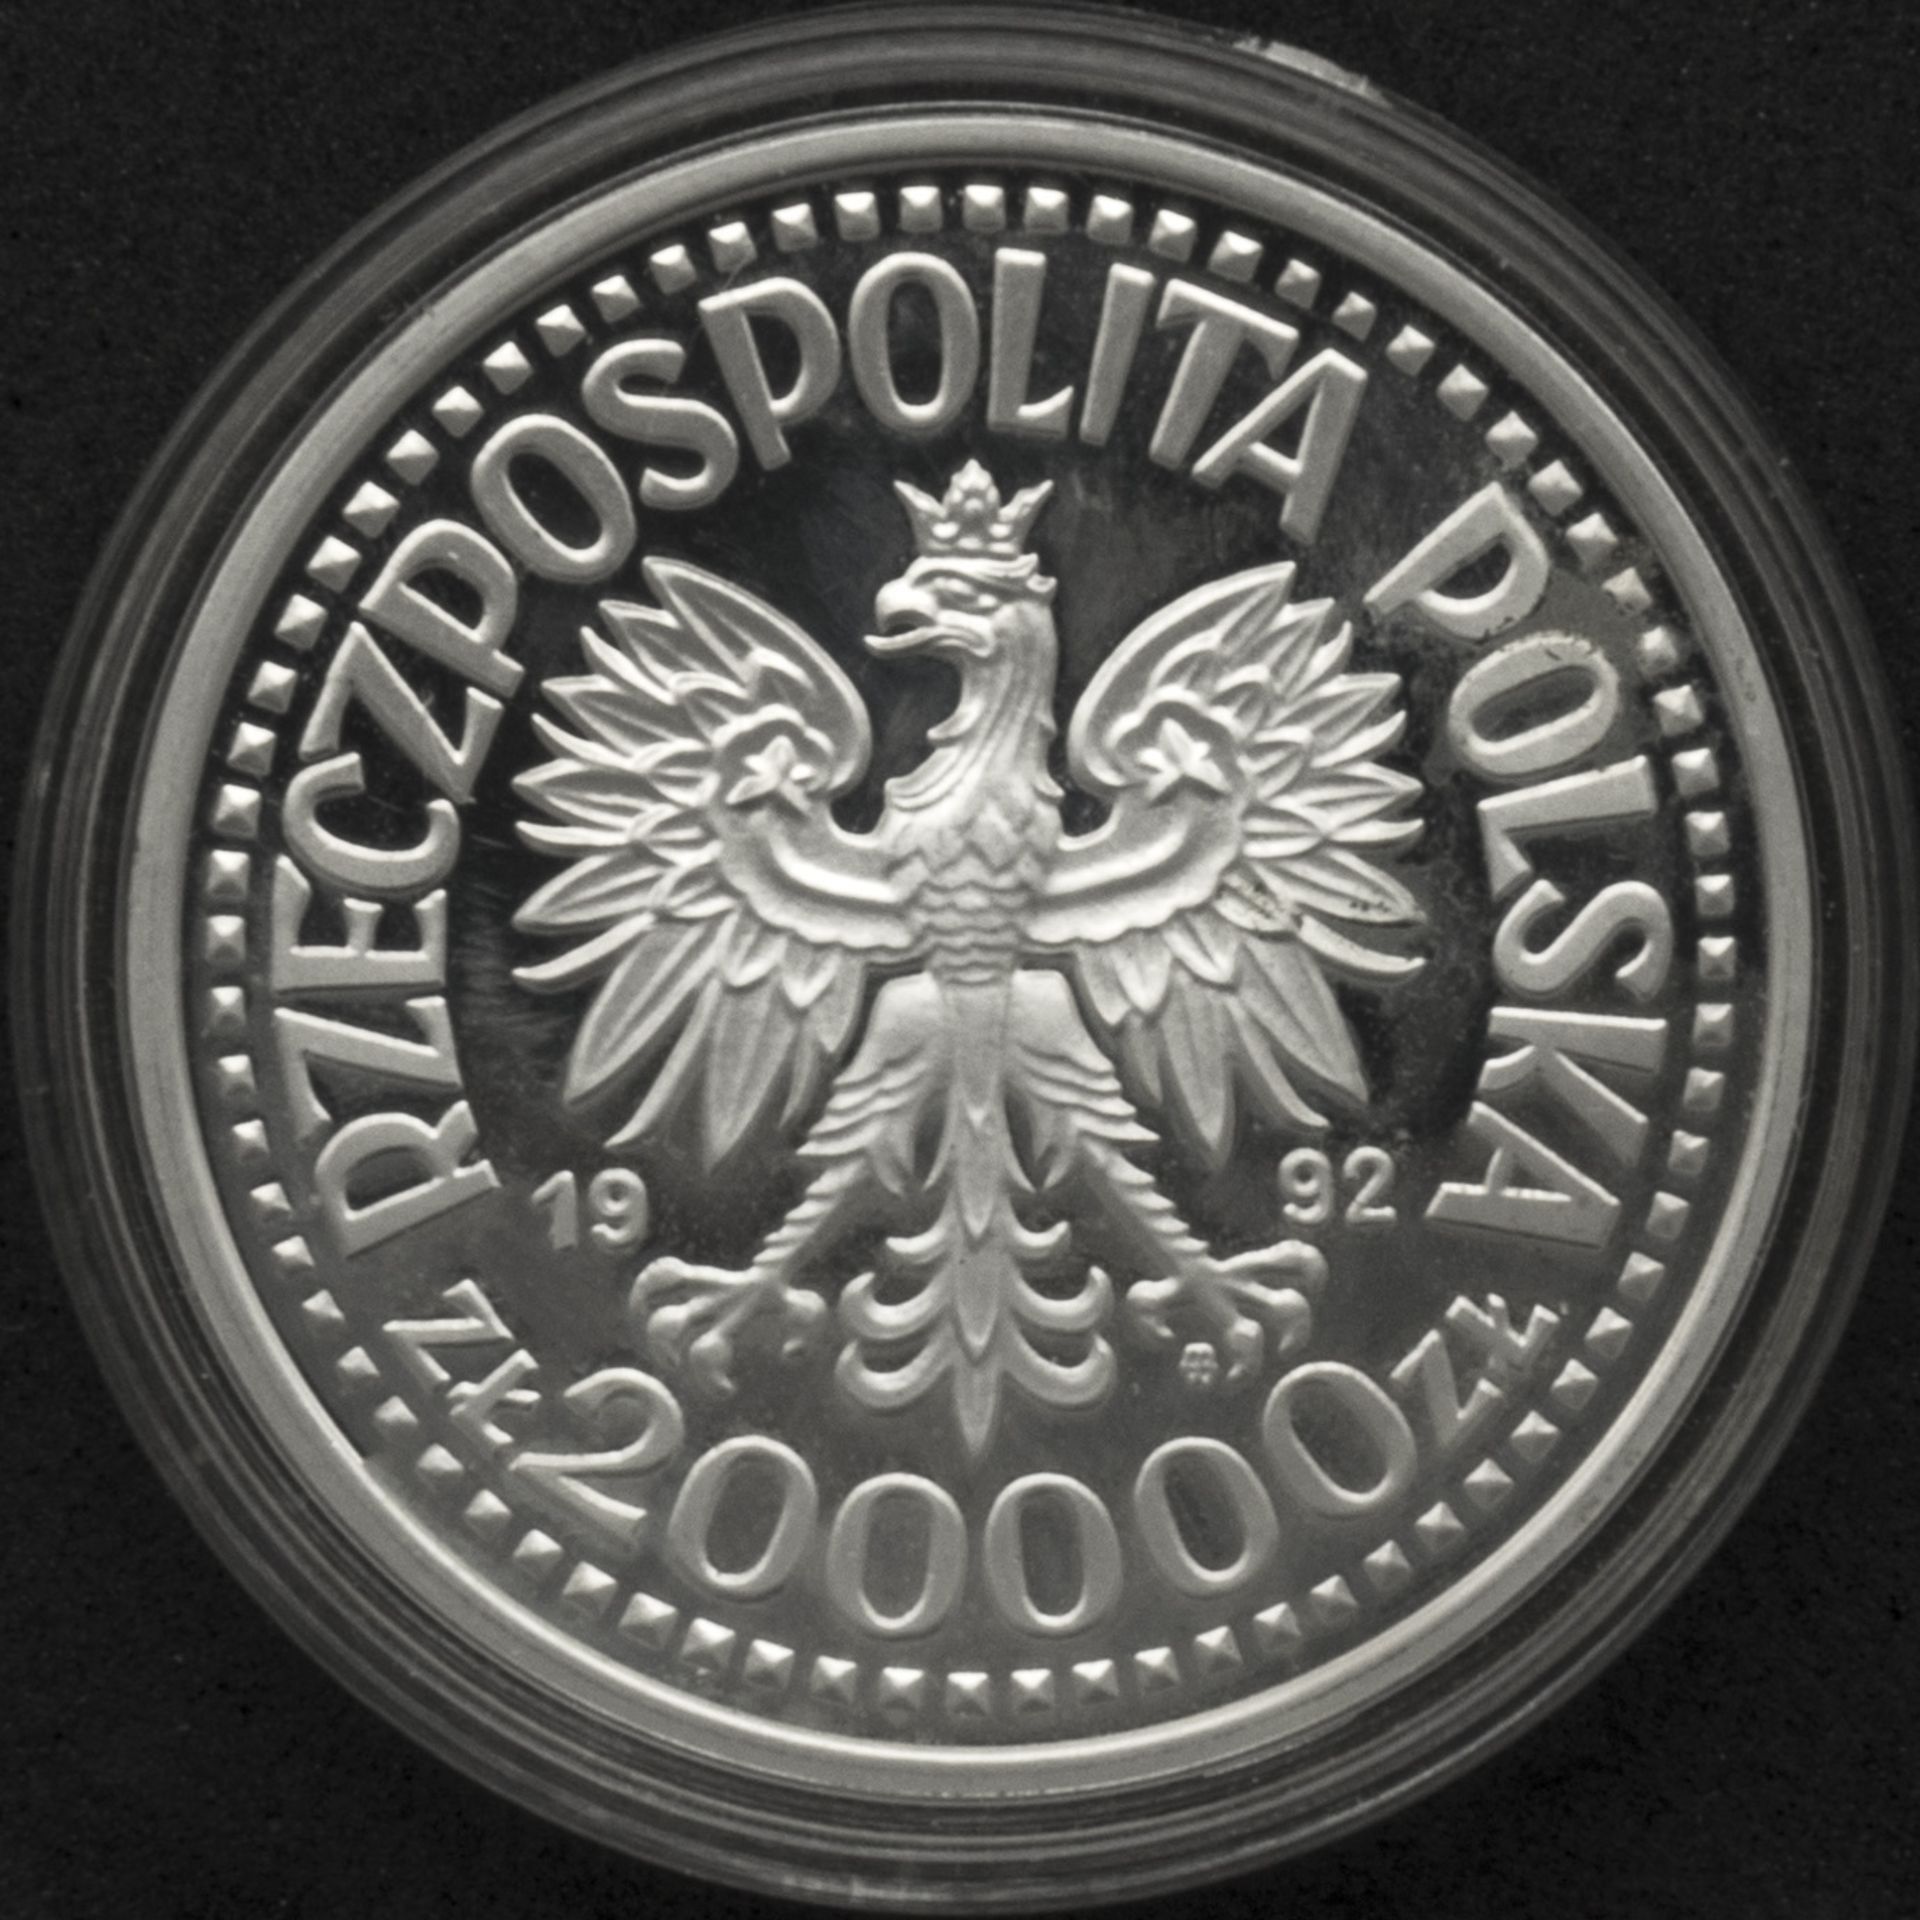 Polen 1992, 200000 Zloty, Wladislaw III. Silber. KM 254. PP - Image 2 of 2